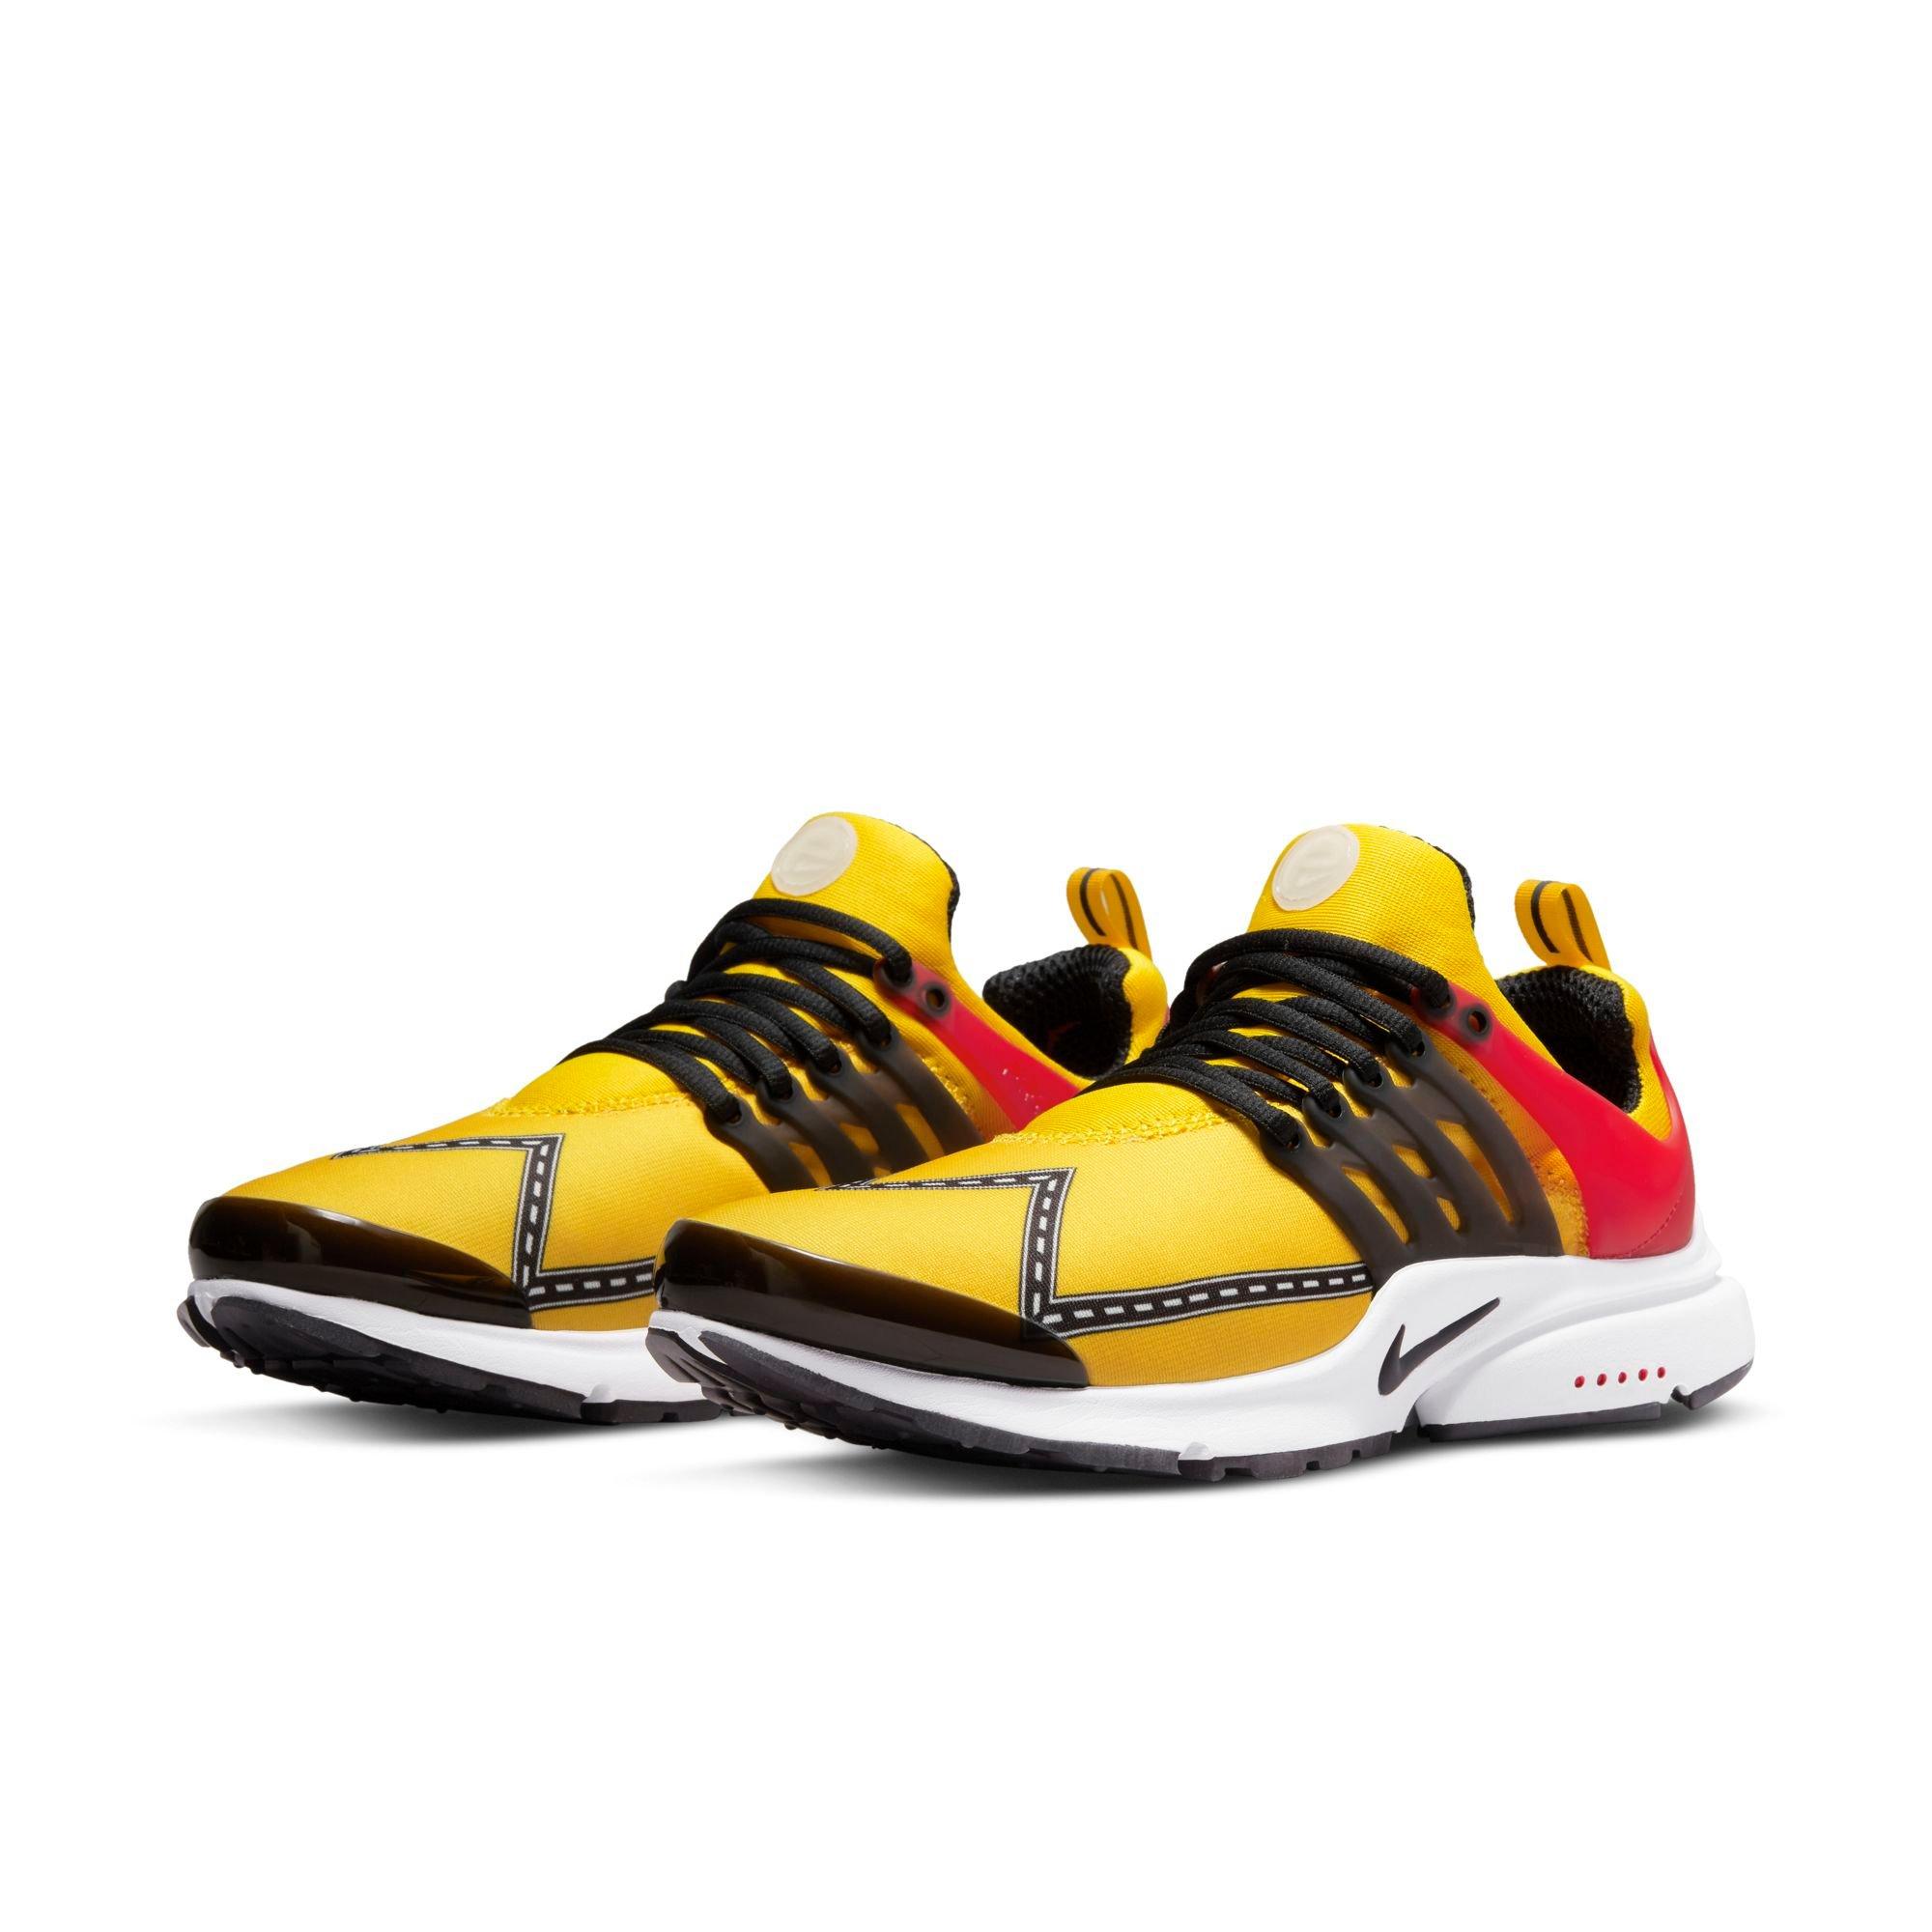 Nike Air Presto "Speed Yellow/Black/University Red/White" Shoe